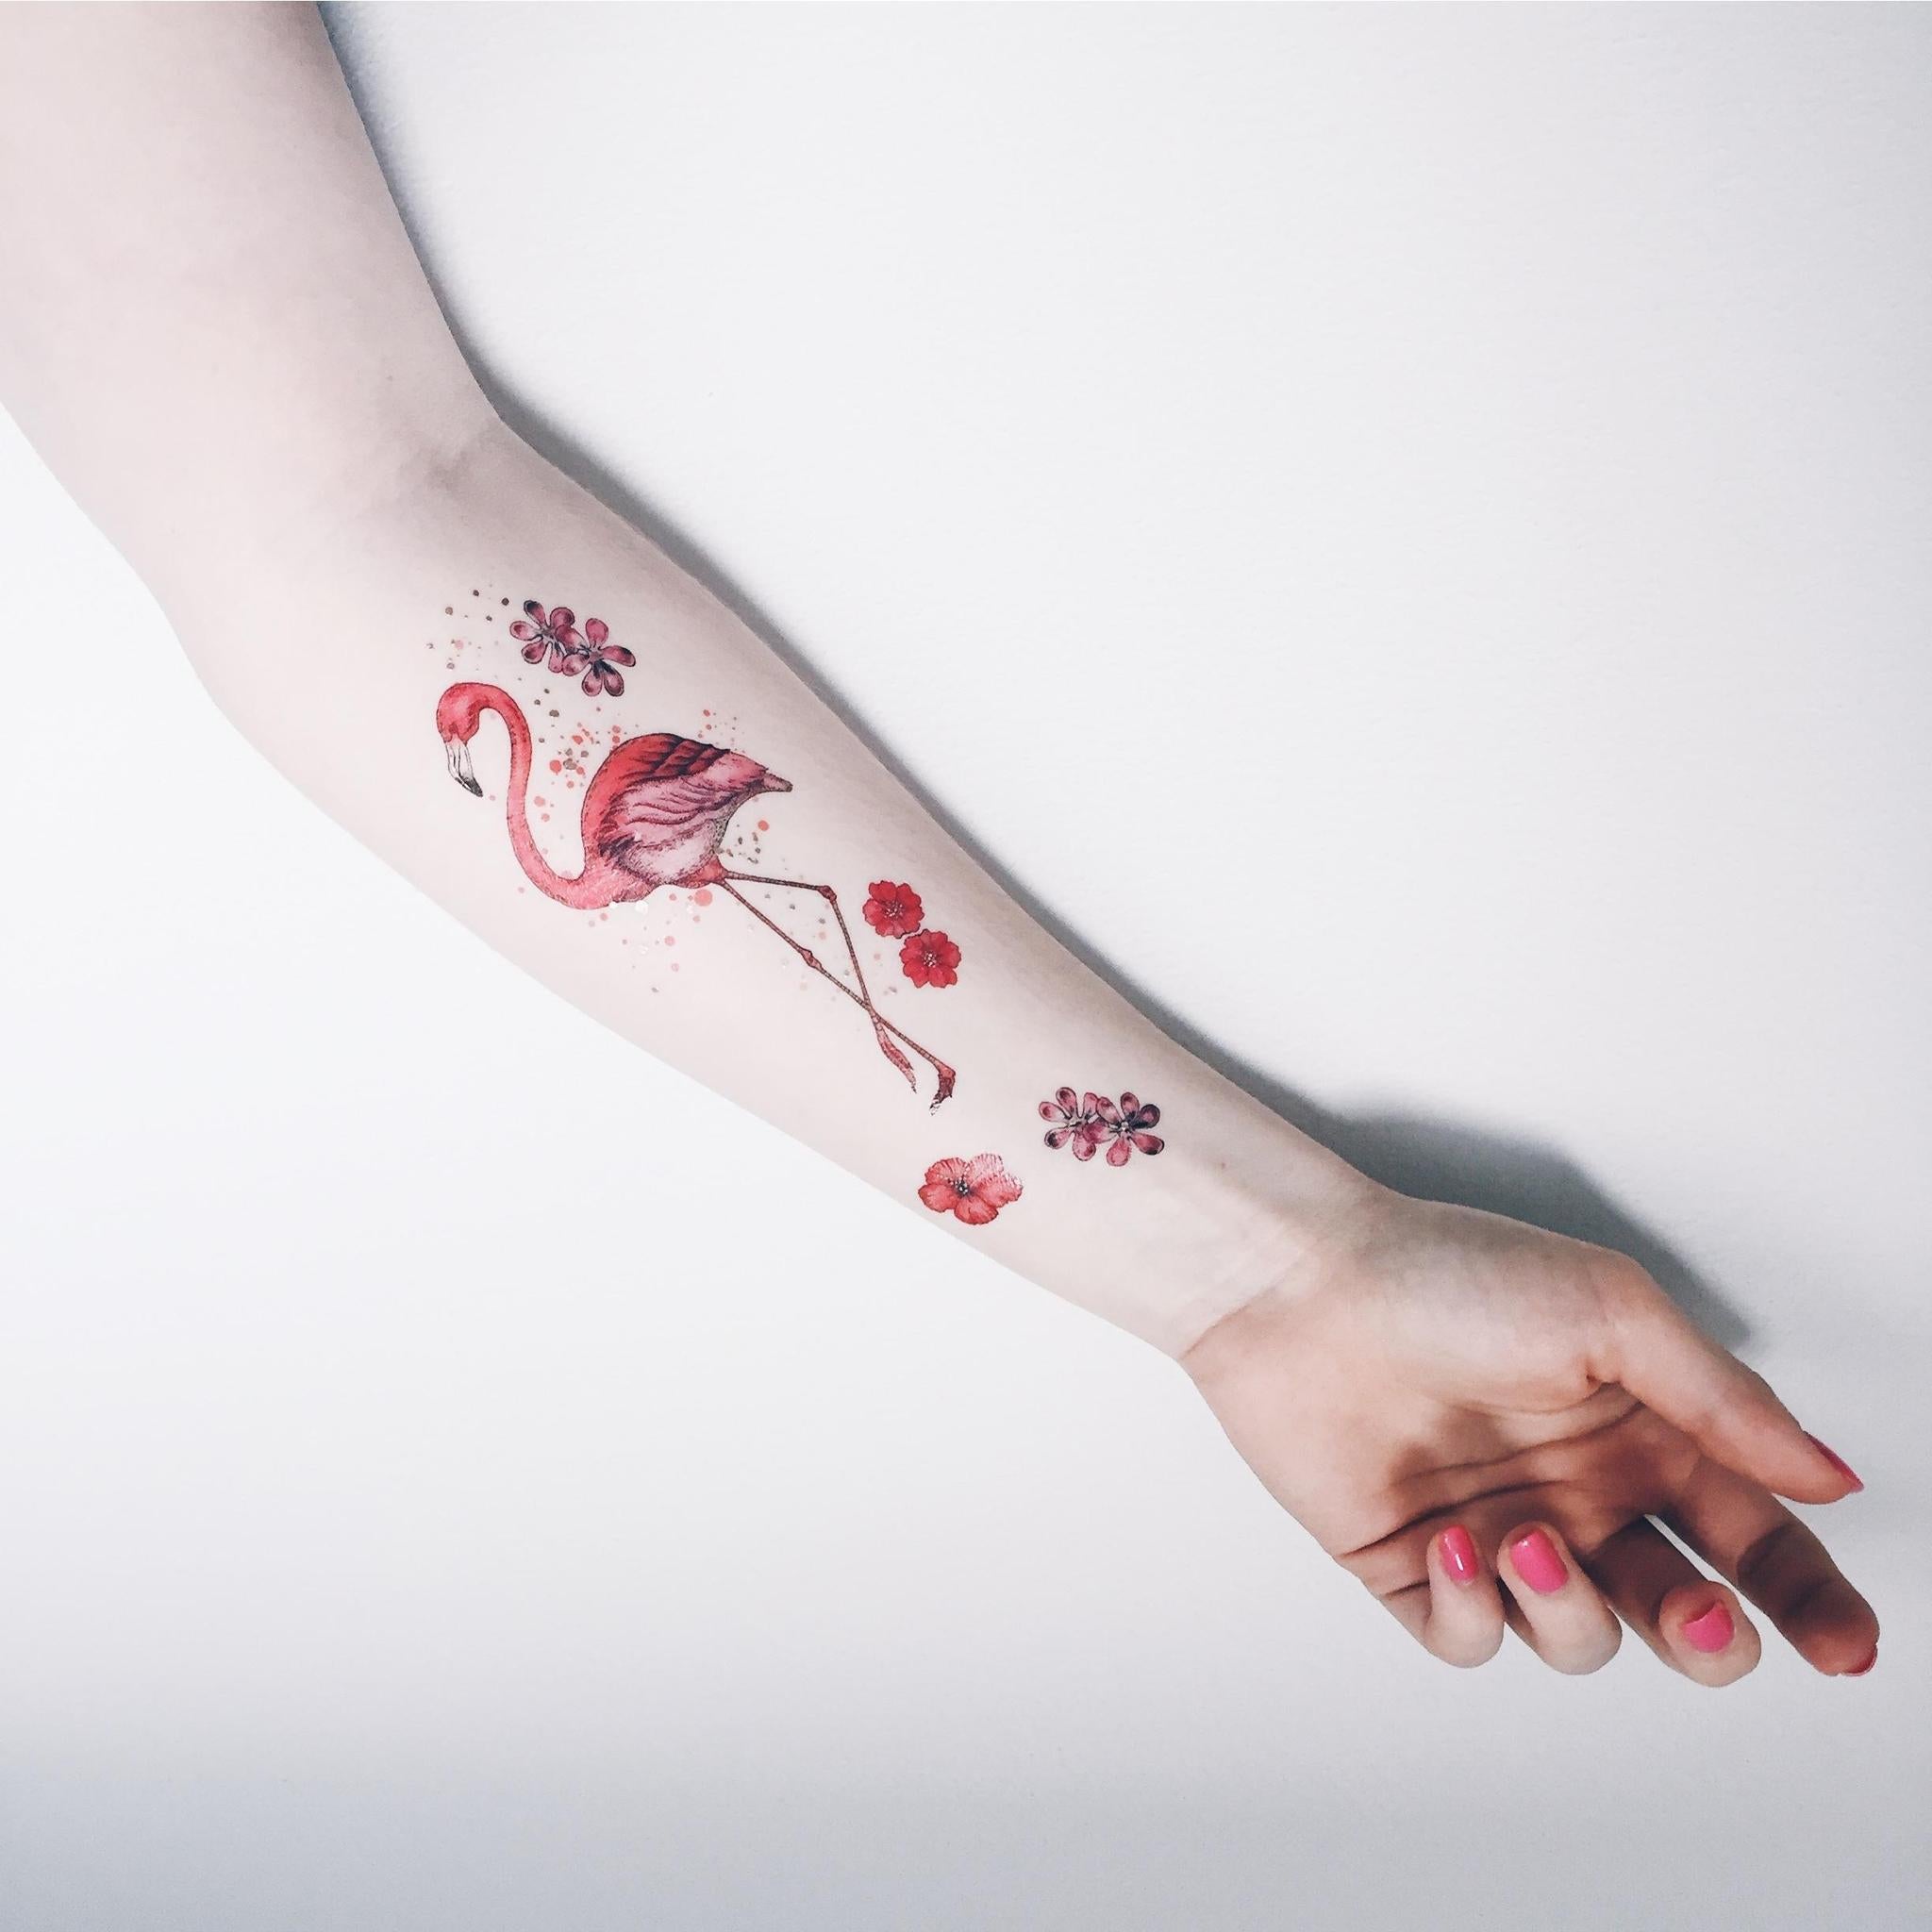 Flamingo tattoo by Andrea Morales | Post 22957